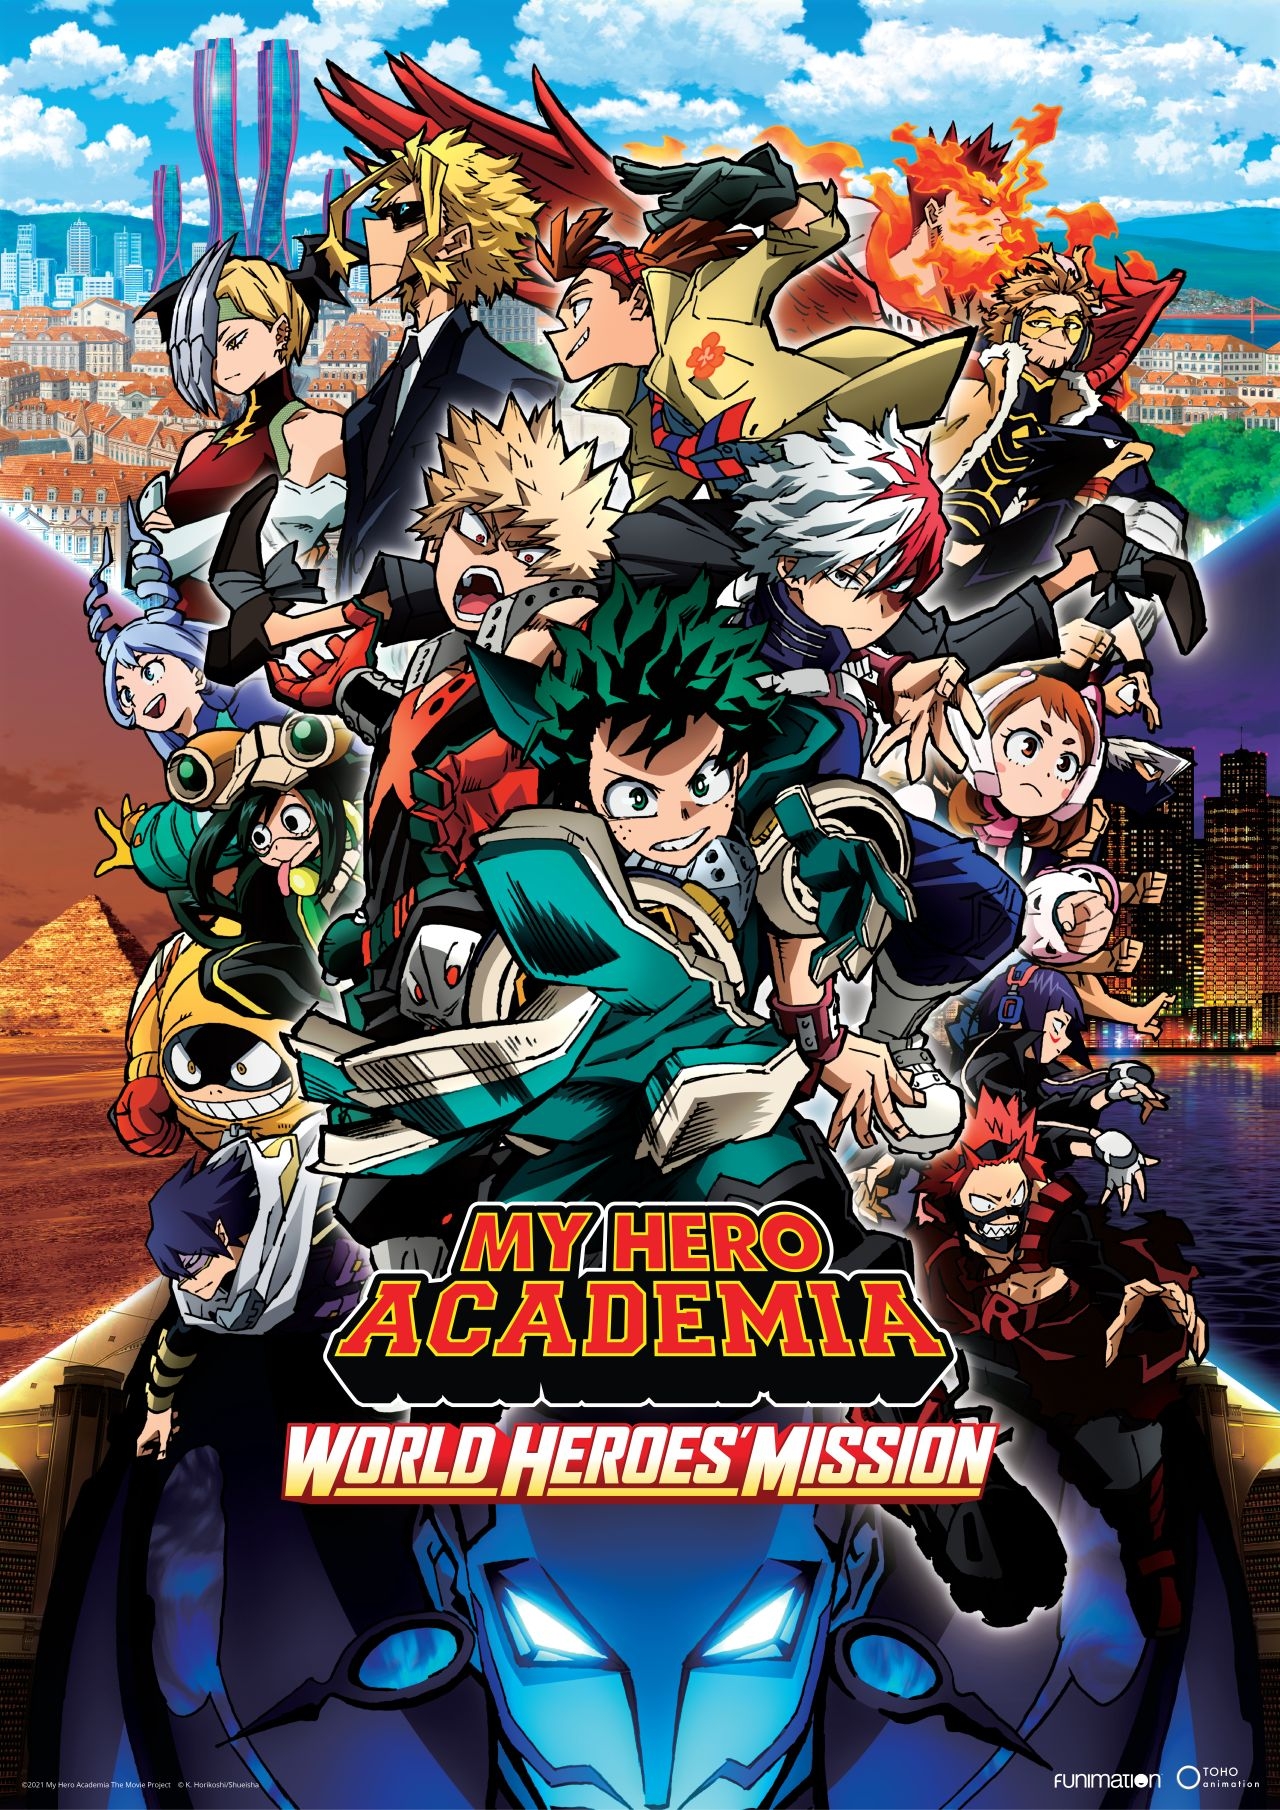 My Hero Academia World Heroes Mission: New Dub Trailer, Tickets